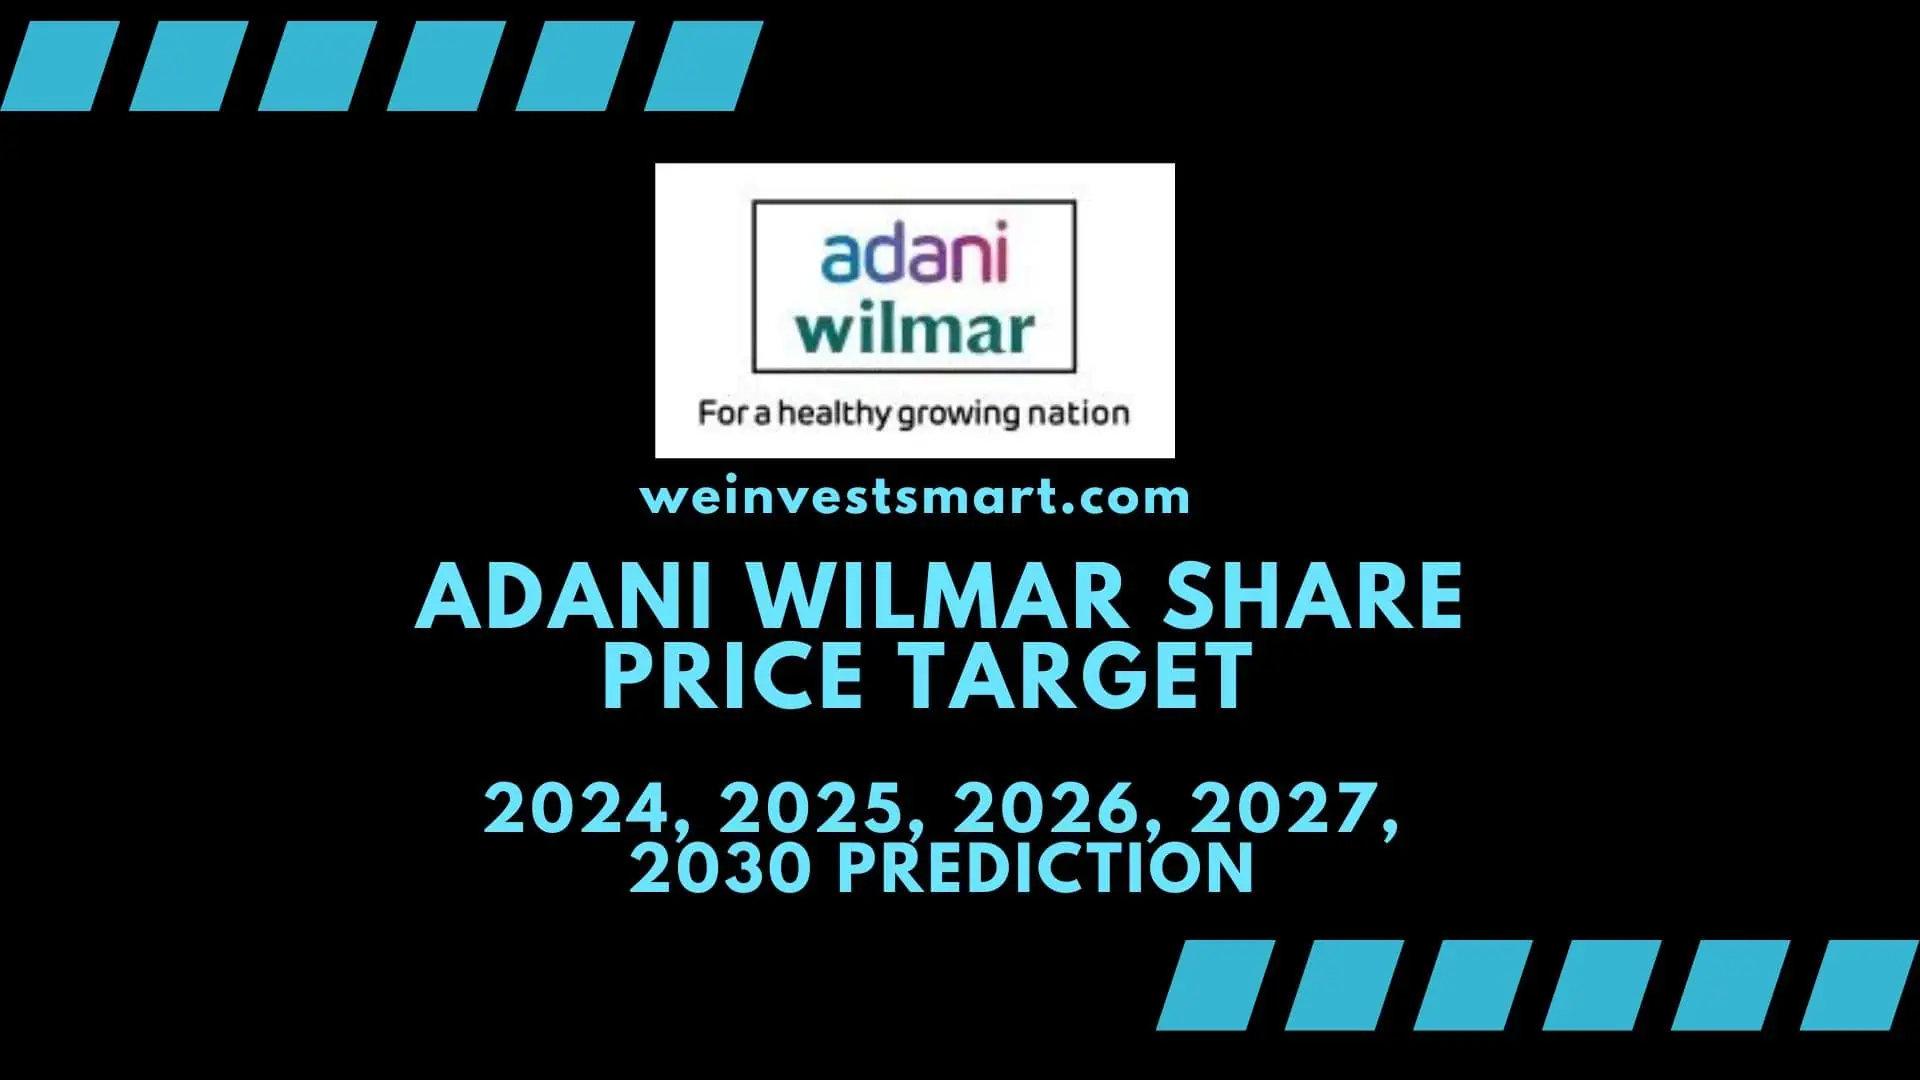 Adani Wilmar share price target 2024, 2025, 2026, 2027, 2030 prediction